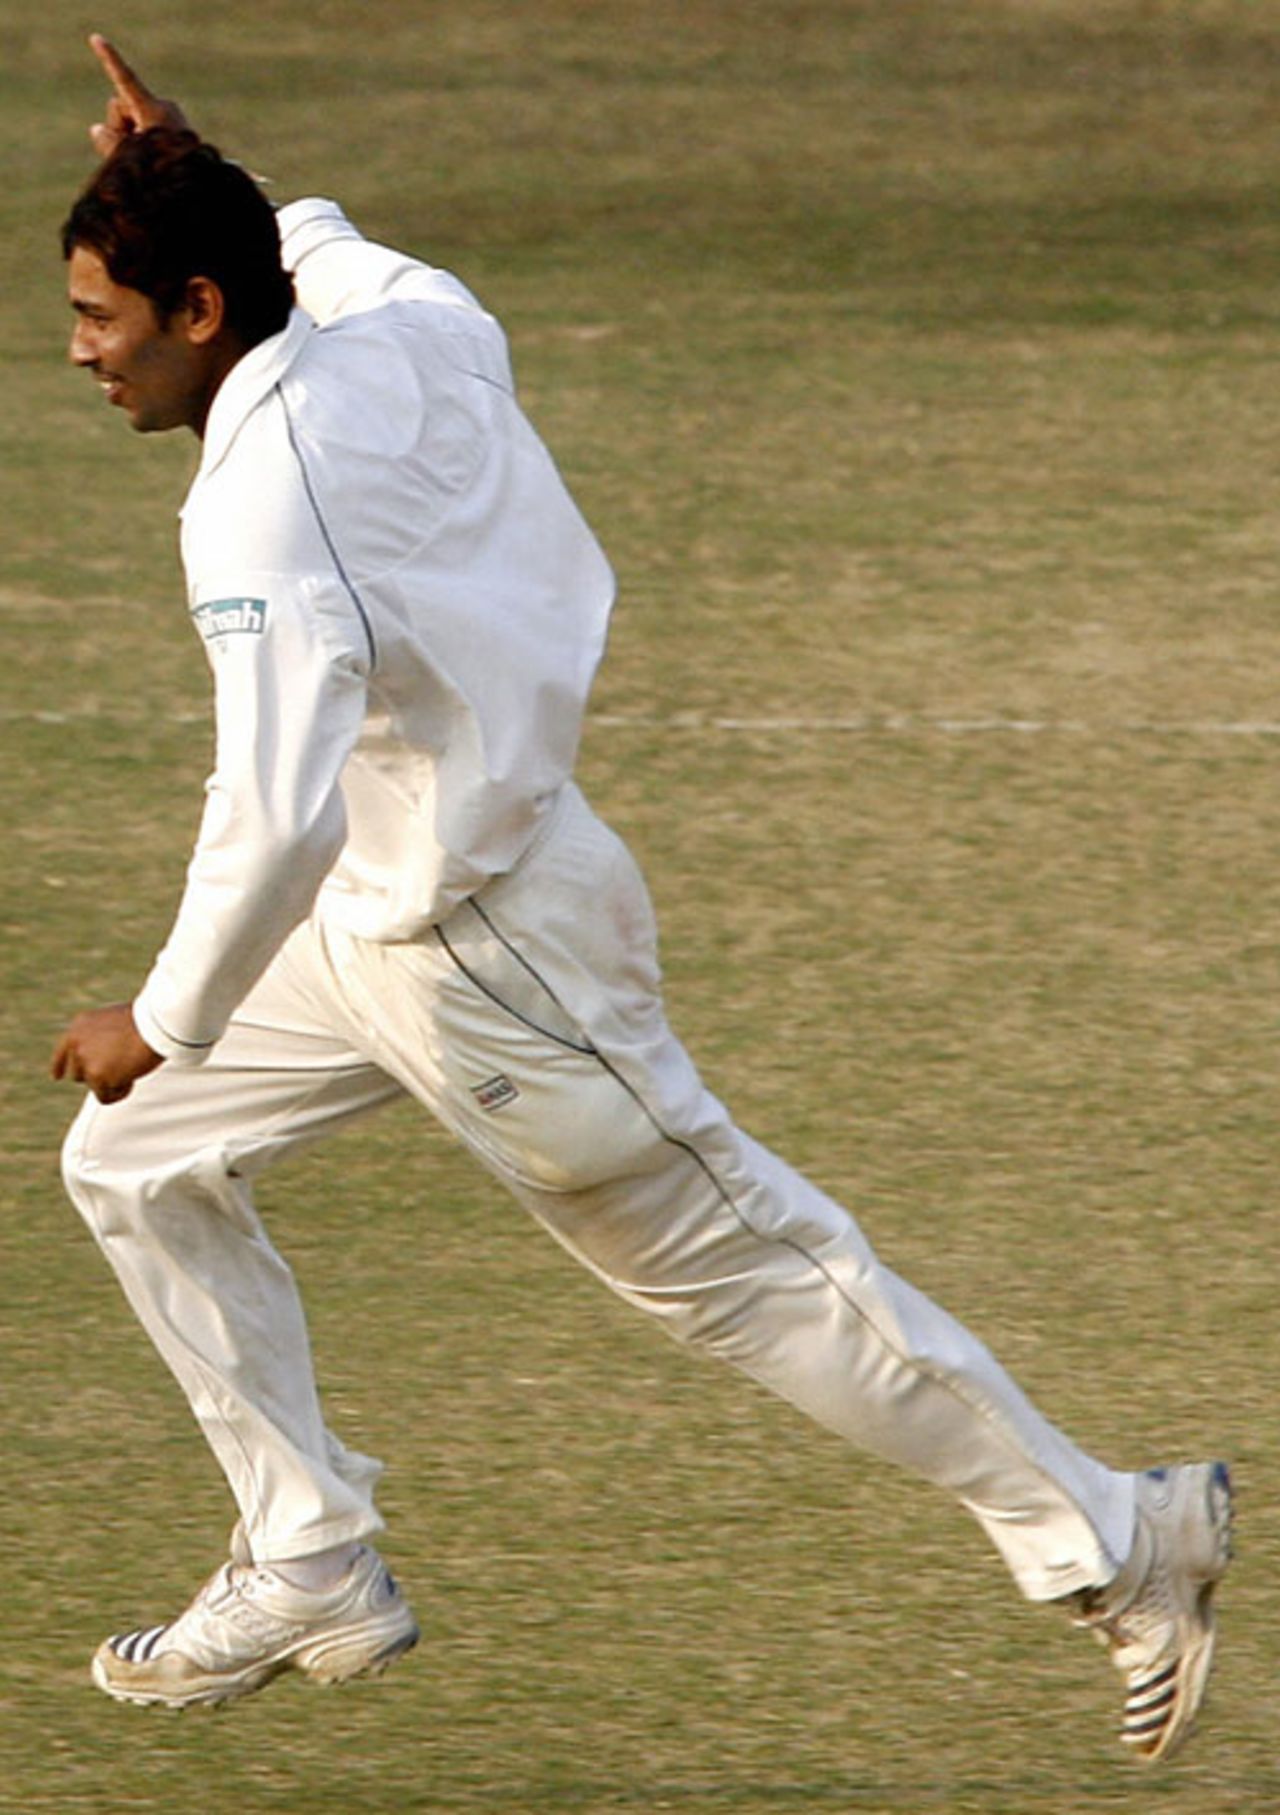 Tillakaratne Dilshan celebrates one of his four wickets, Bangladesh v Sri Lanka, 2nd Test, Chittagong, 4th day, January 6, 2008